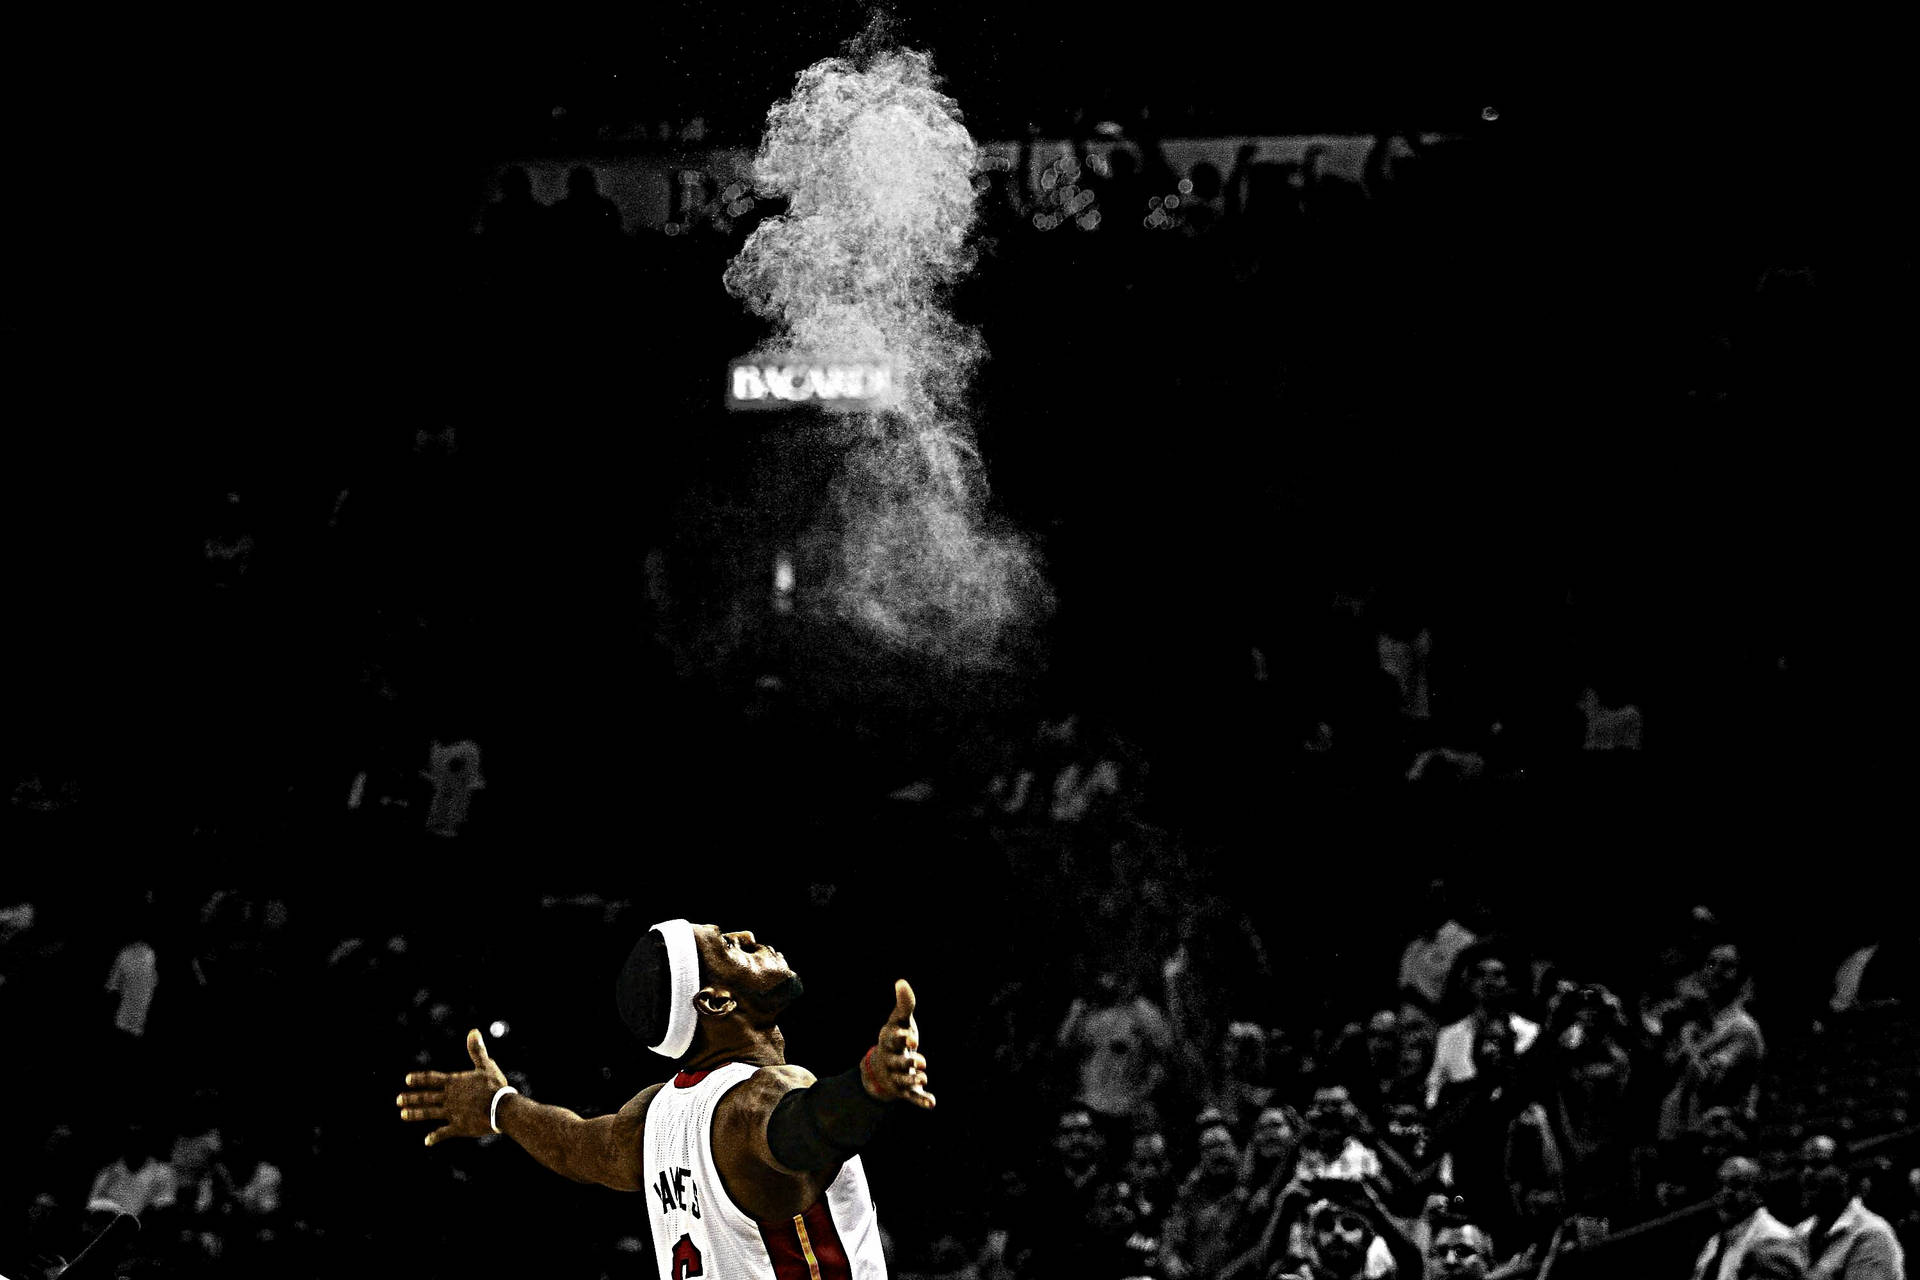 Wallpaper LeBron James, Miami Heat, basketball, game, sports, player, black and white, in the air, smoke - Lebron James